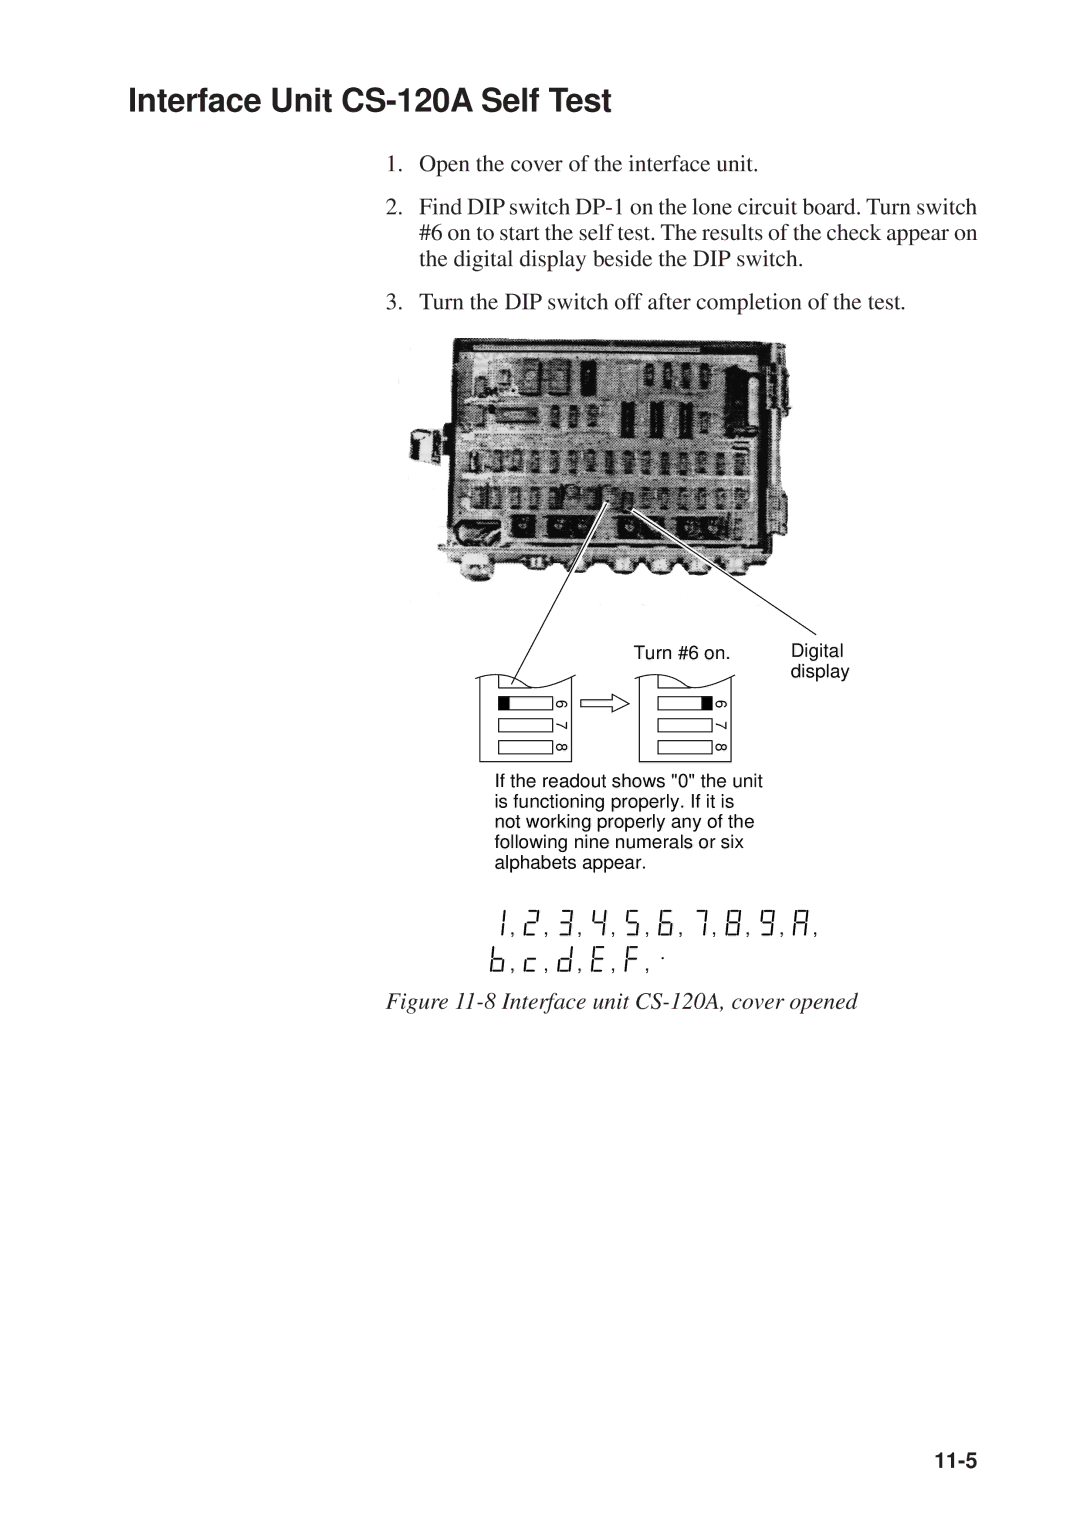 Furuno MODEL CSH-73 manual Interface Unit CS-120A Self Test, Interface unit CS-120A, cover opened 